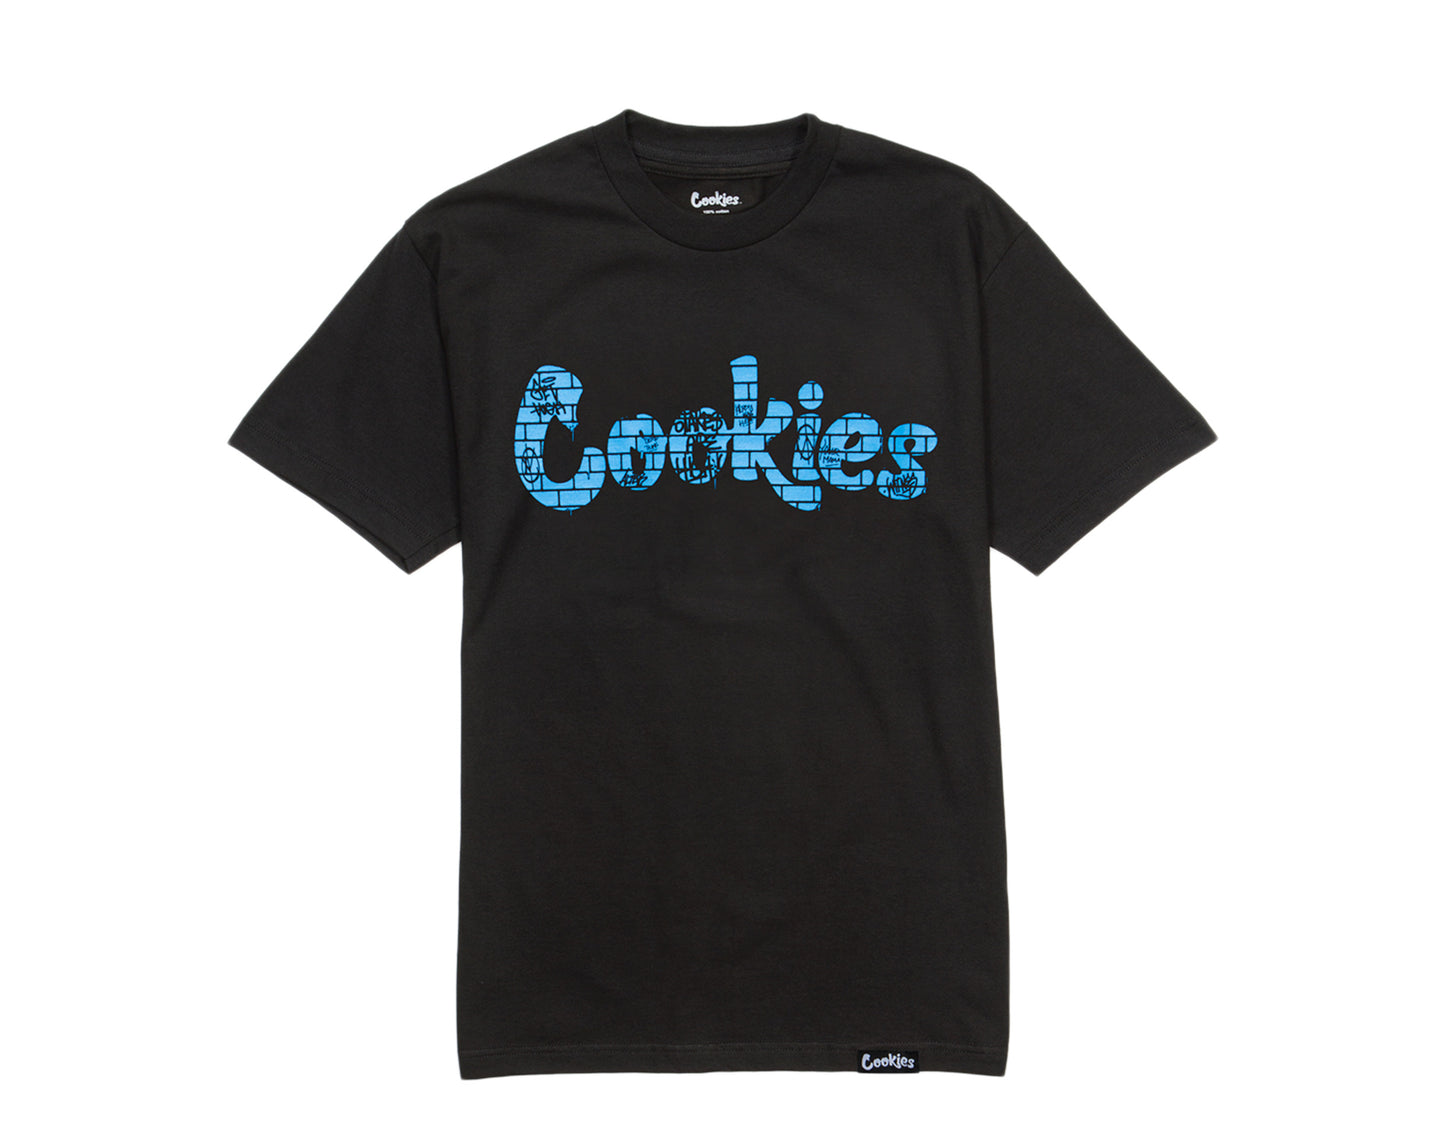 Cookies Off The Wall Black Men's Tee Shirt 1542T4021-BLK